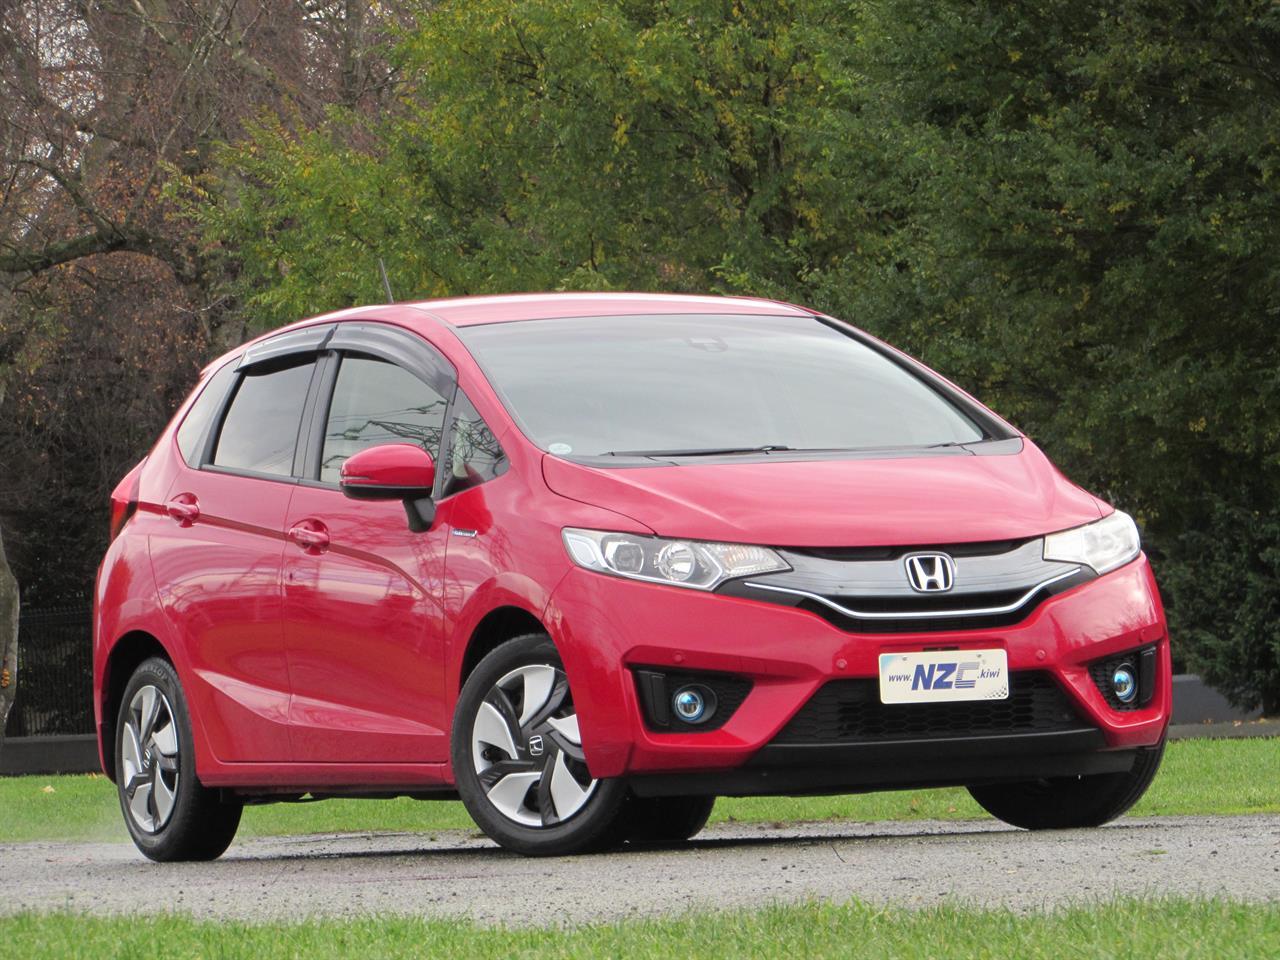 NZC best hot price for 2015 Honda FIT in Christchurch